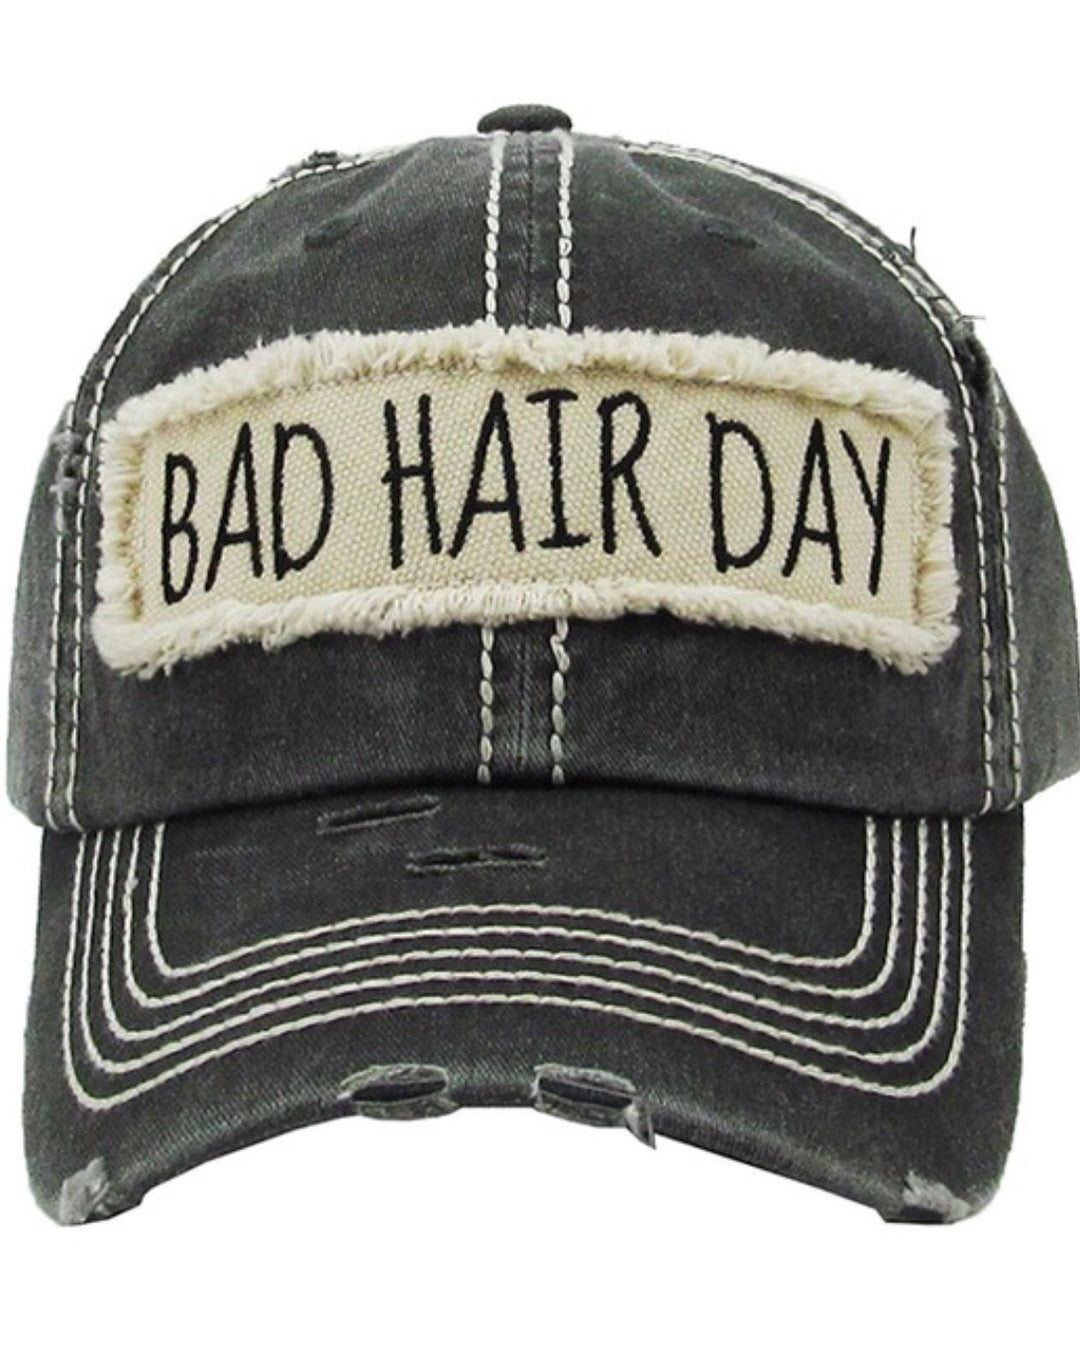 Bad Hair Day Vintage Baseball Cap Hat - Black